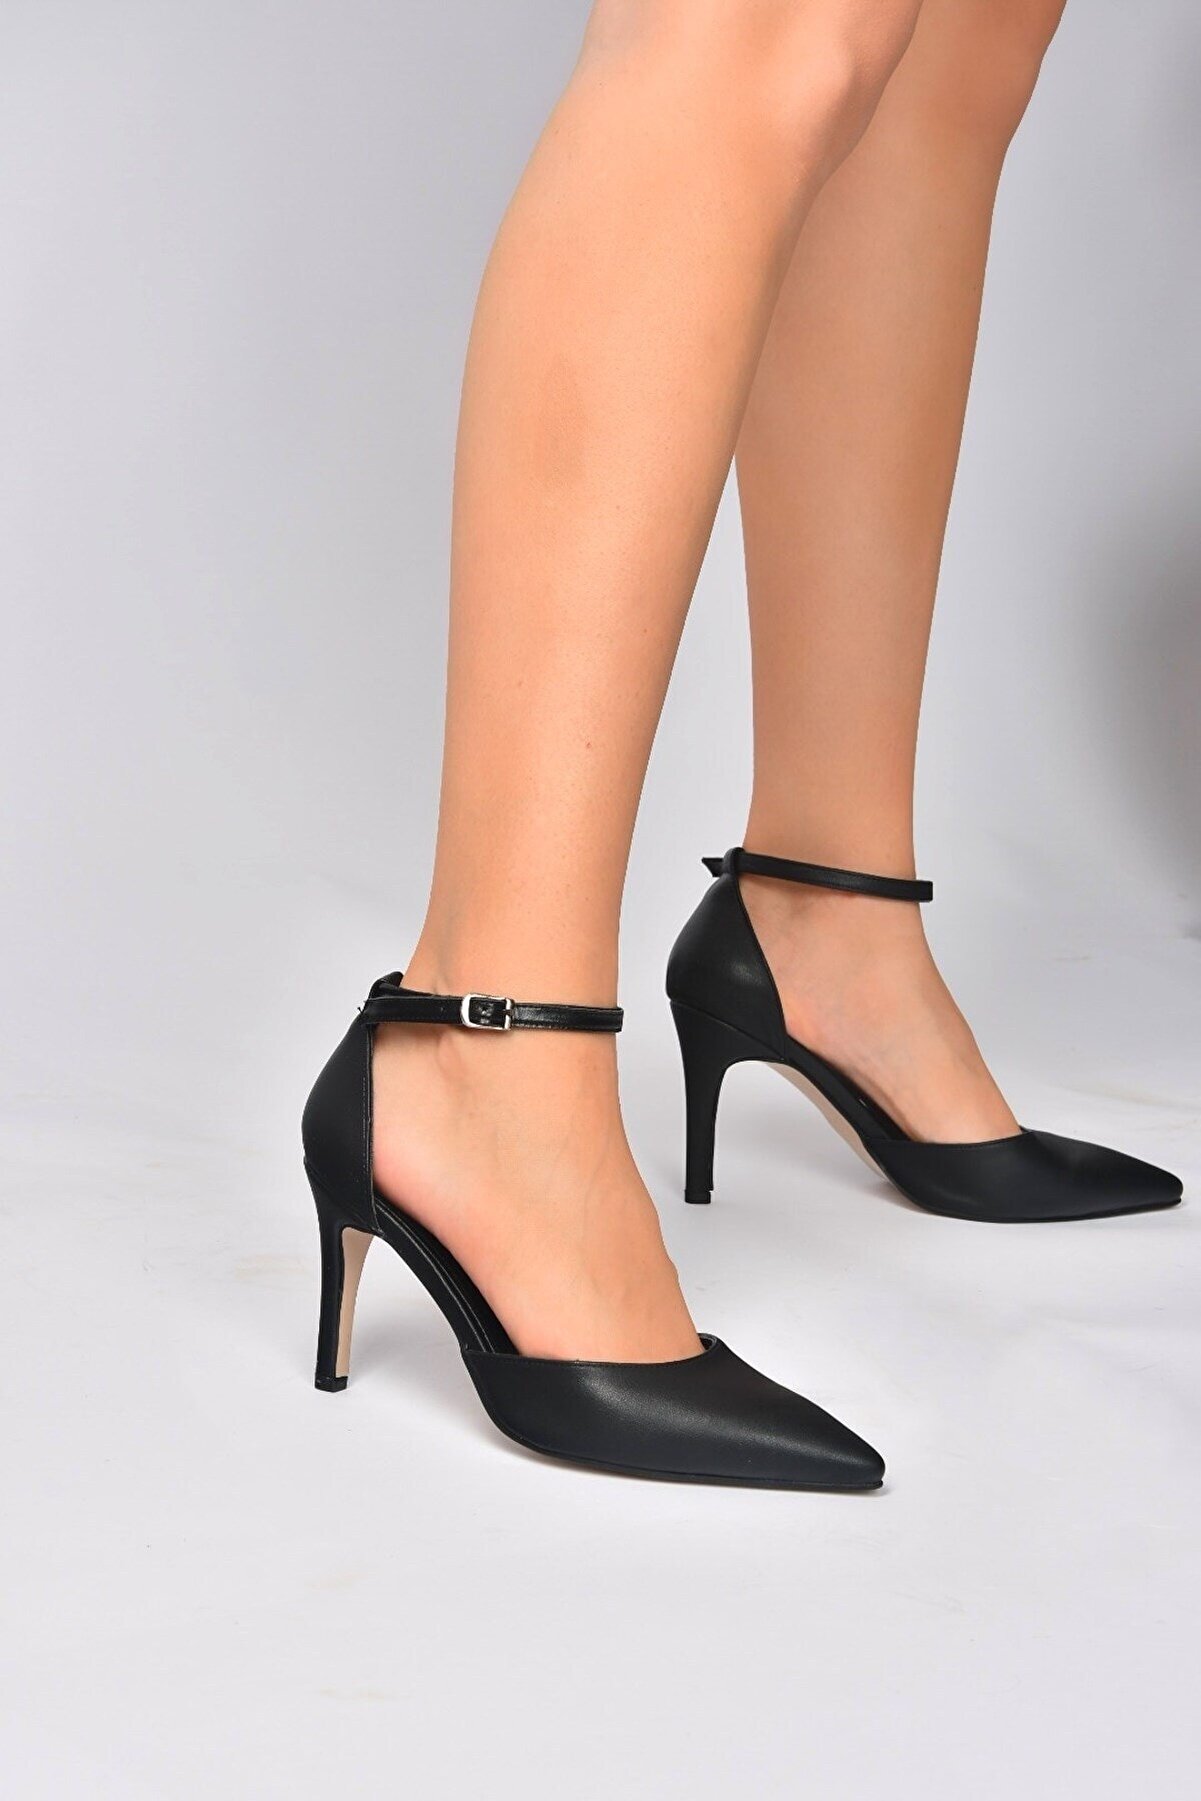 Fox Shoes Siyah Kadın Topuklu Ayakkabı K404010709